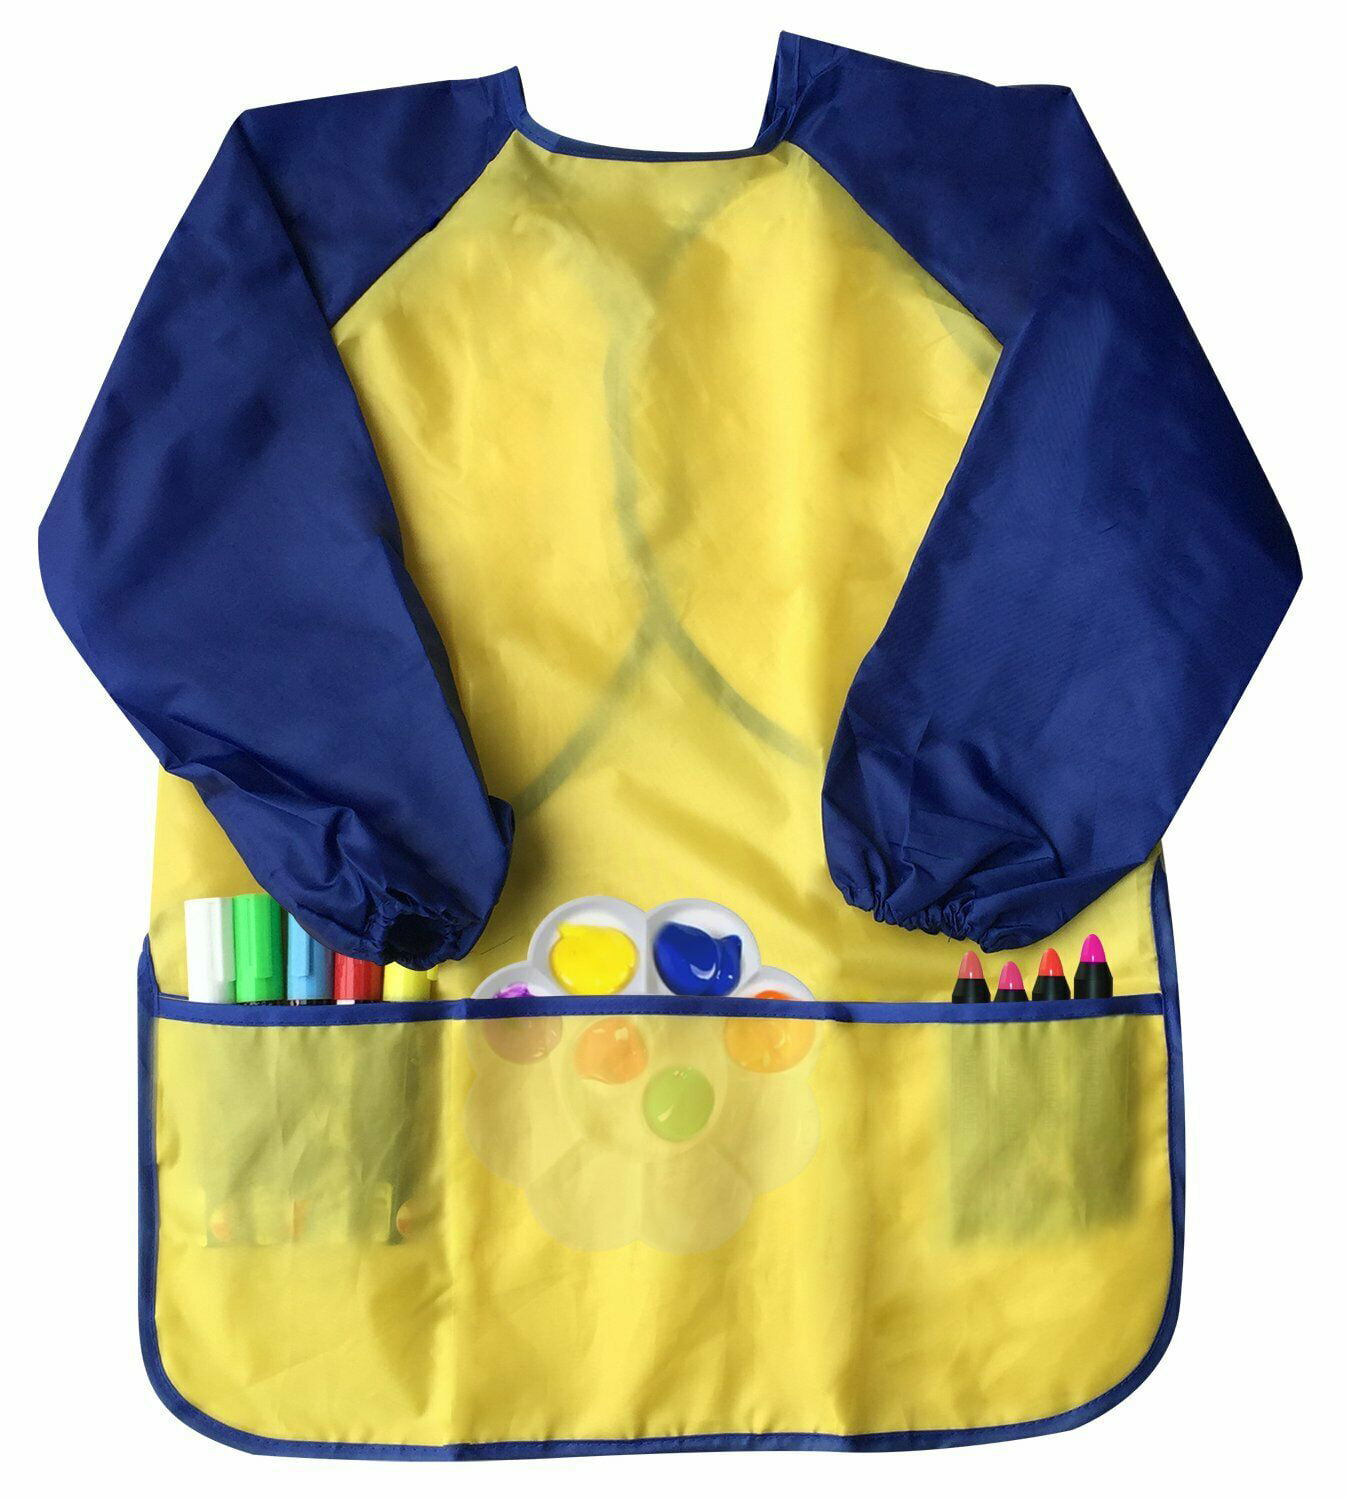 Fiween Long Sleeve Pack of 2 Kids Art Smocks With 3 Pockets for Age 2-6 YearsChildren Waterproof Artist Painting Aprons 